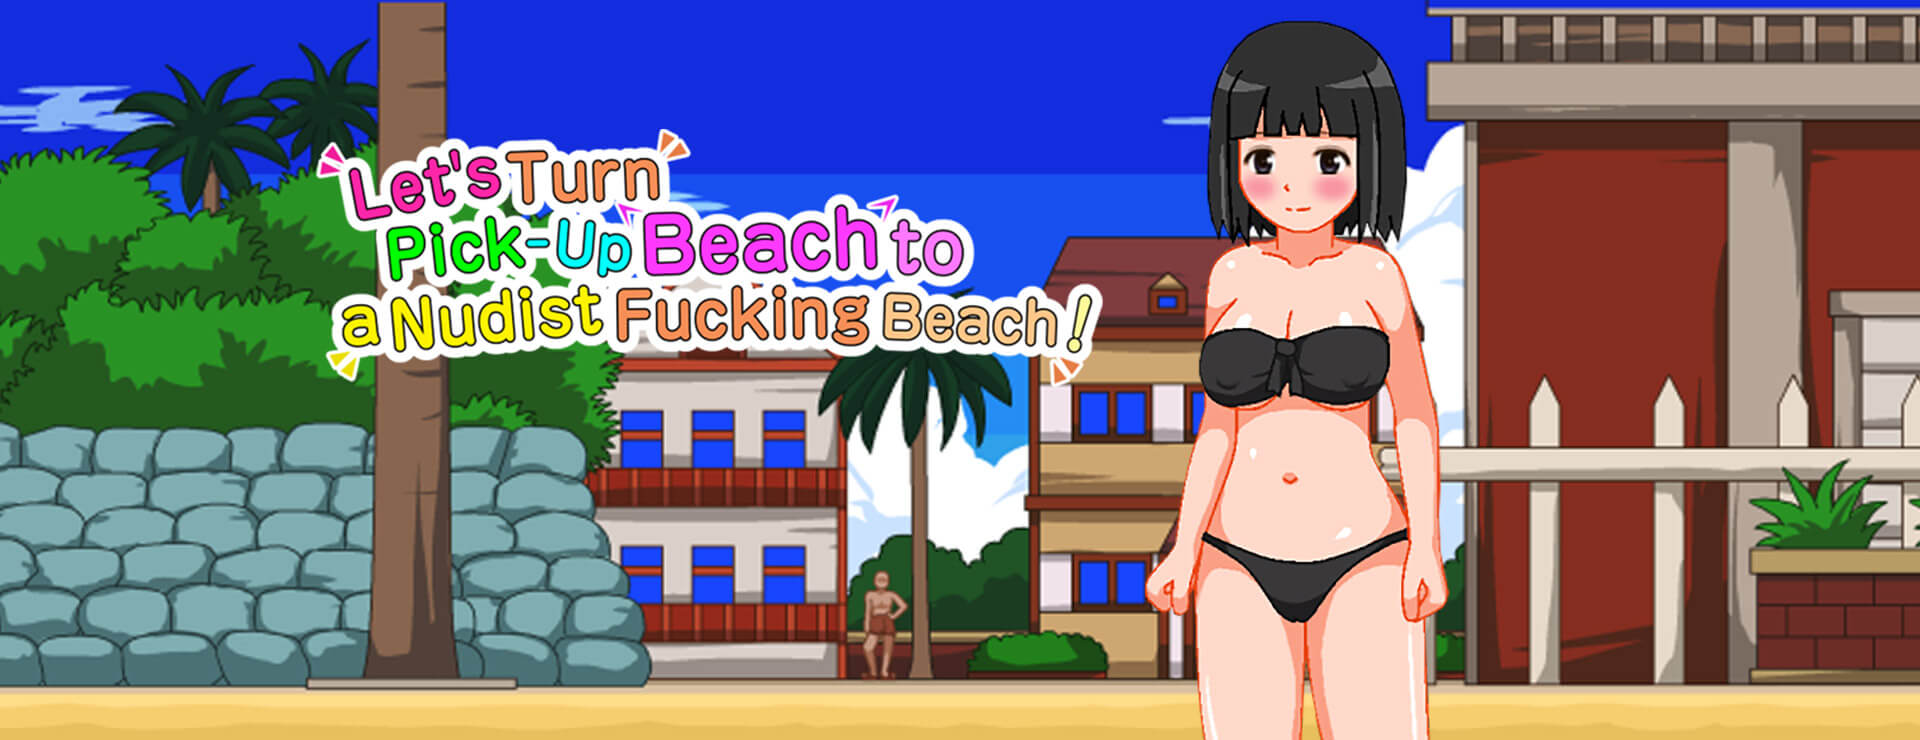 Let’s Turn Pick-Up Beach to a Nudist Fucking Beach!! - Symulacja Gra